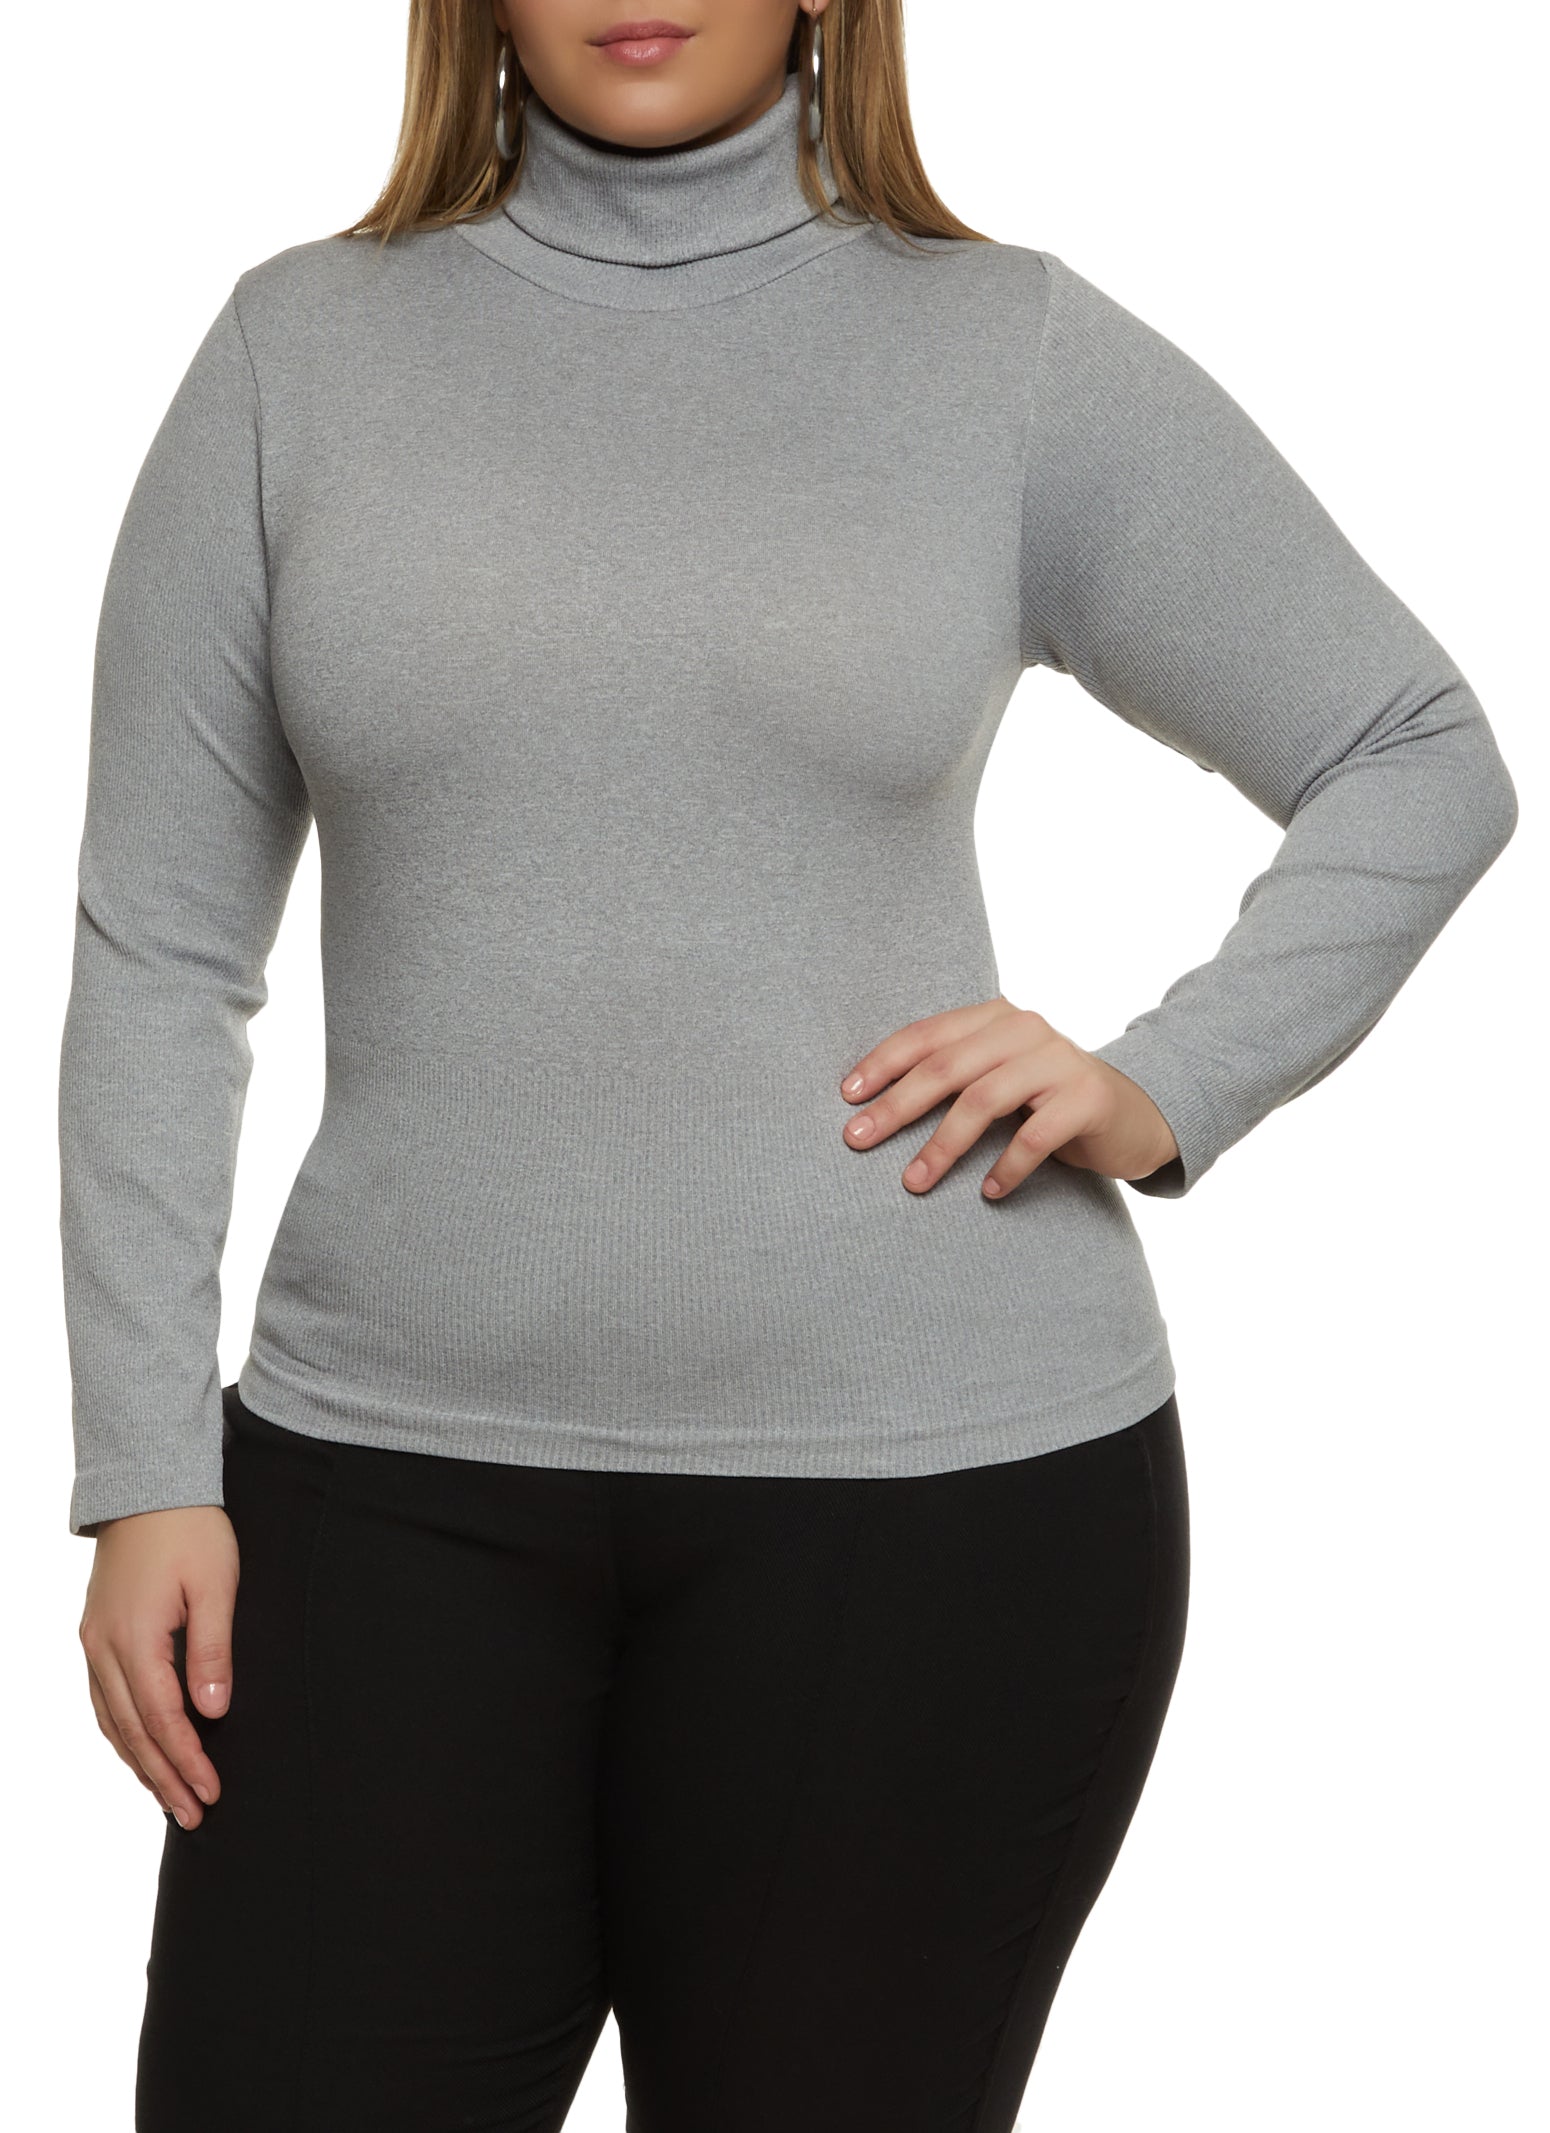 Womens Plus Size Basic Long Sleeve Turtleneck Top, Grey, Size 1X-2X